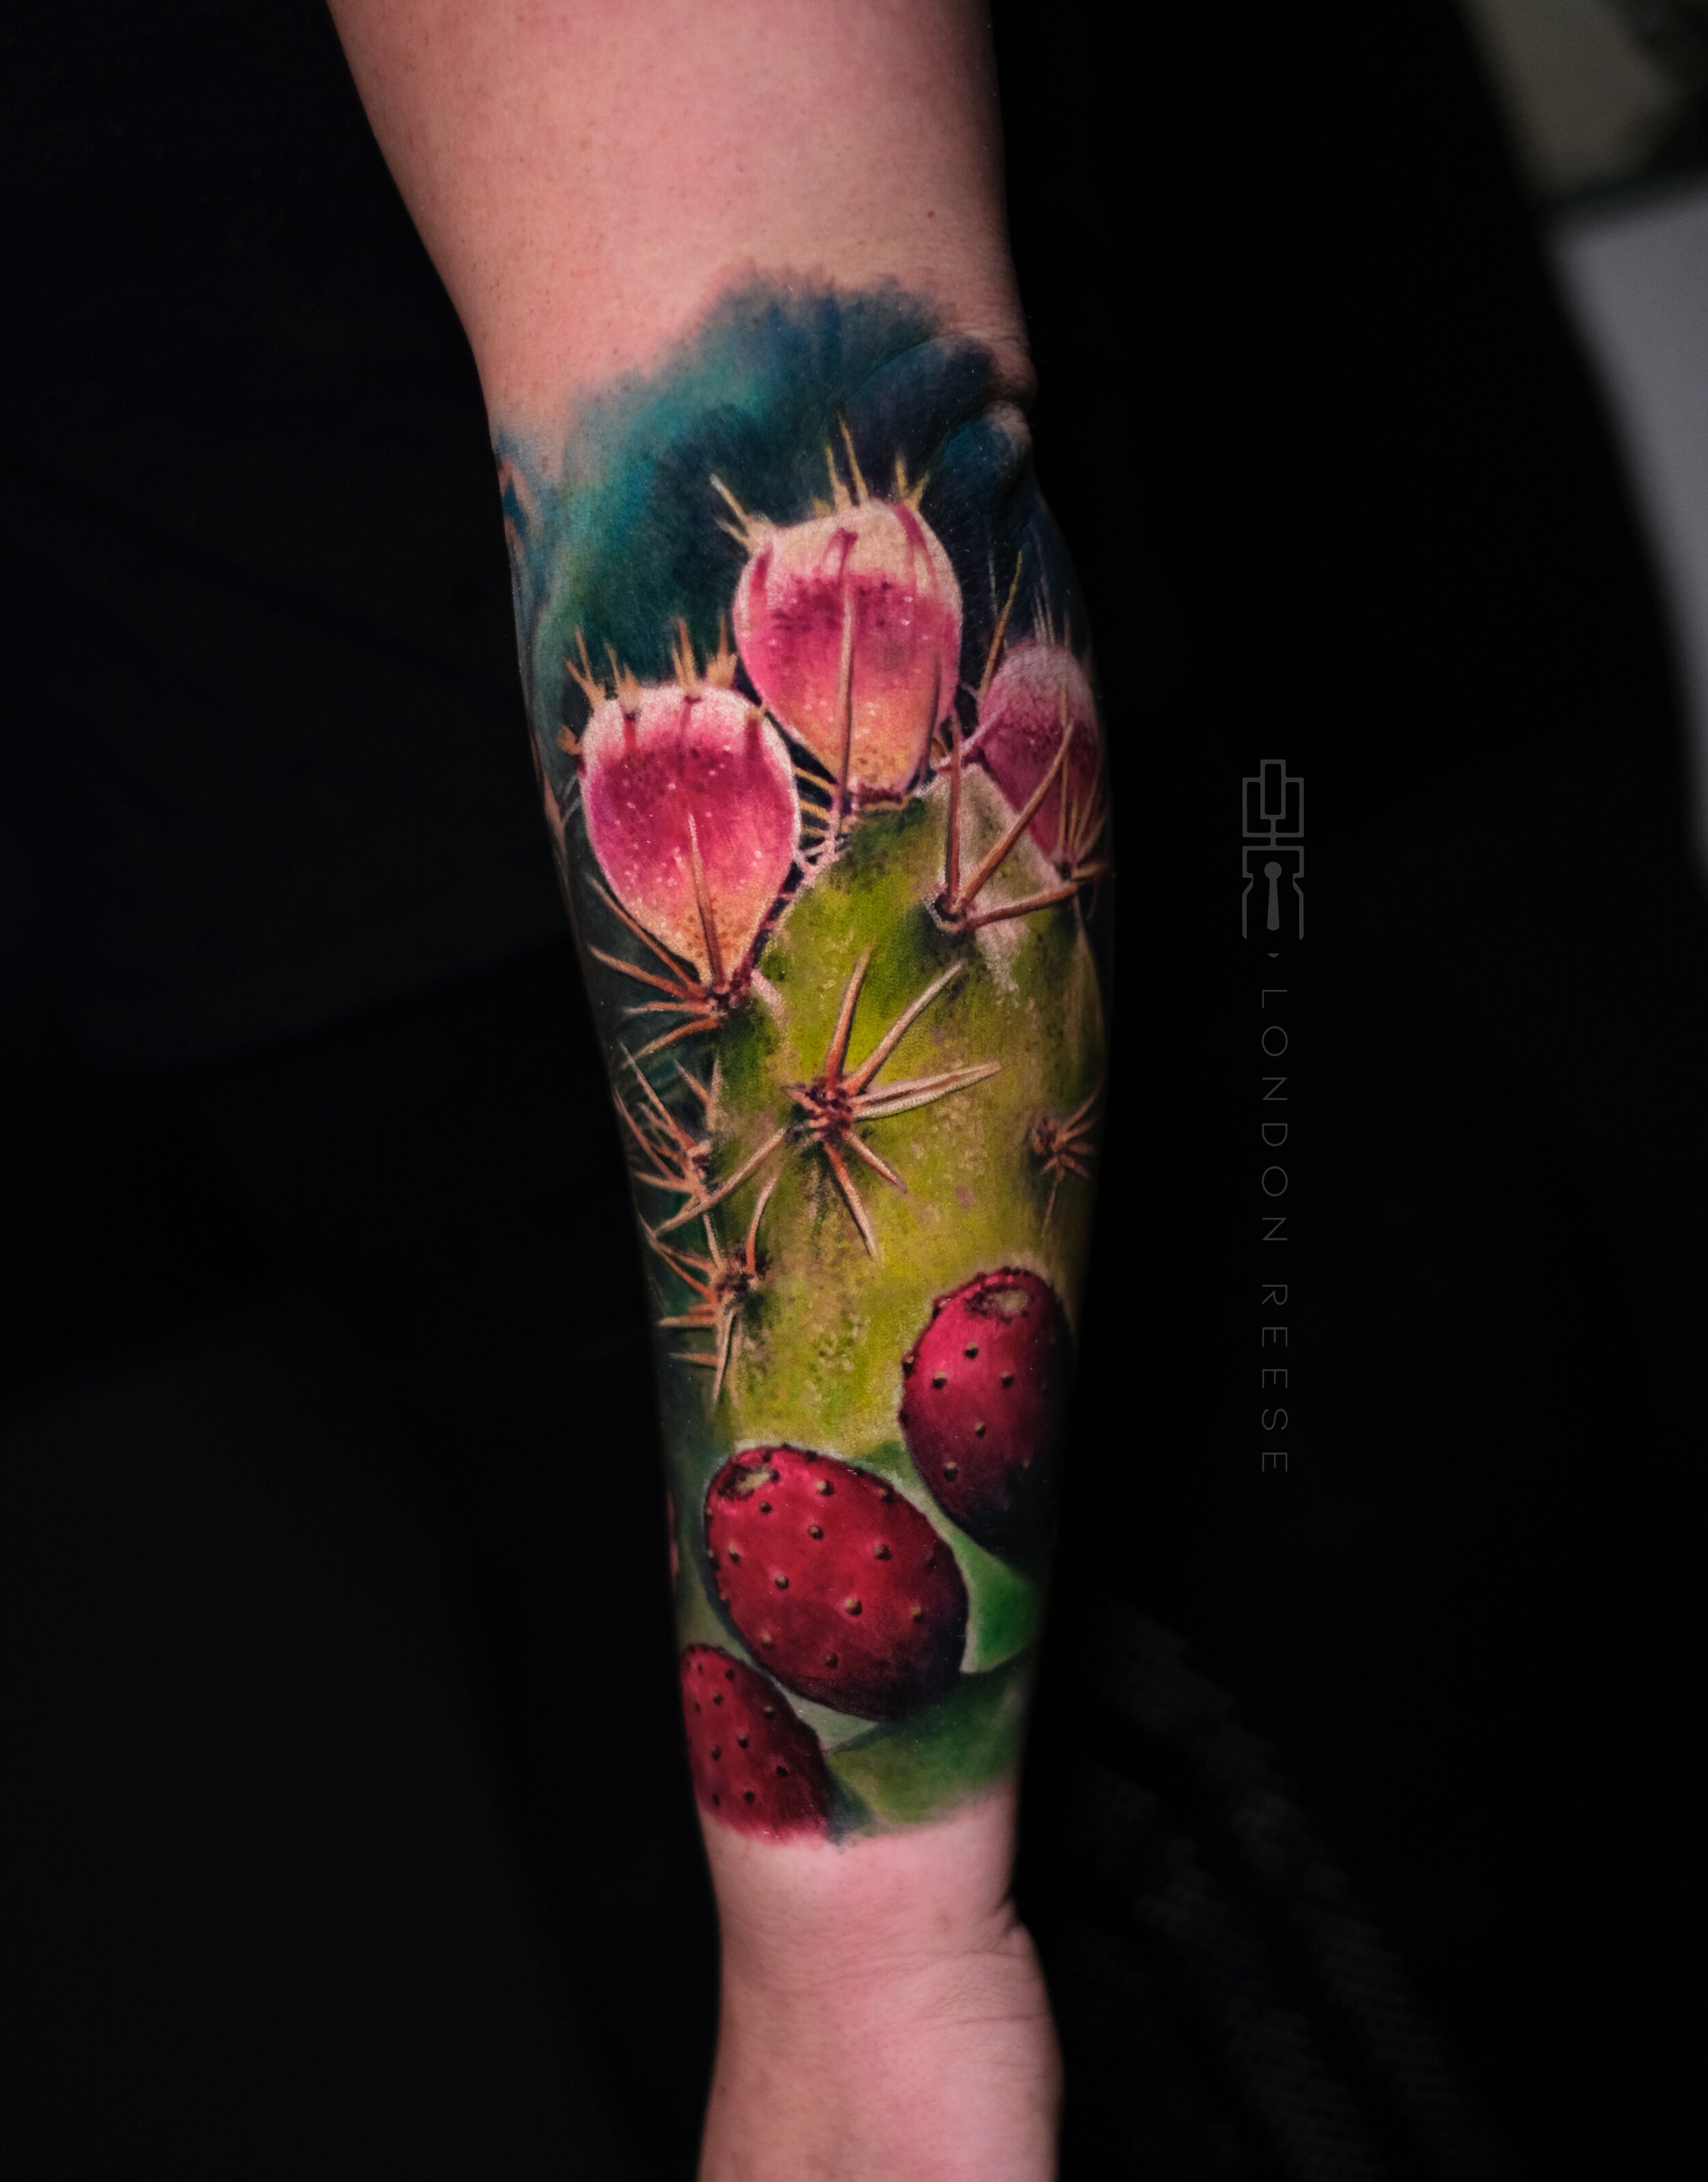 prickly pear cactus tattoo.jpg